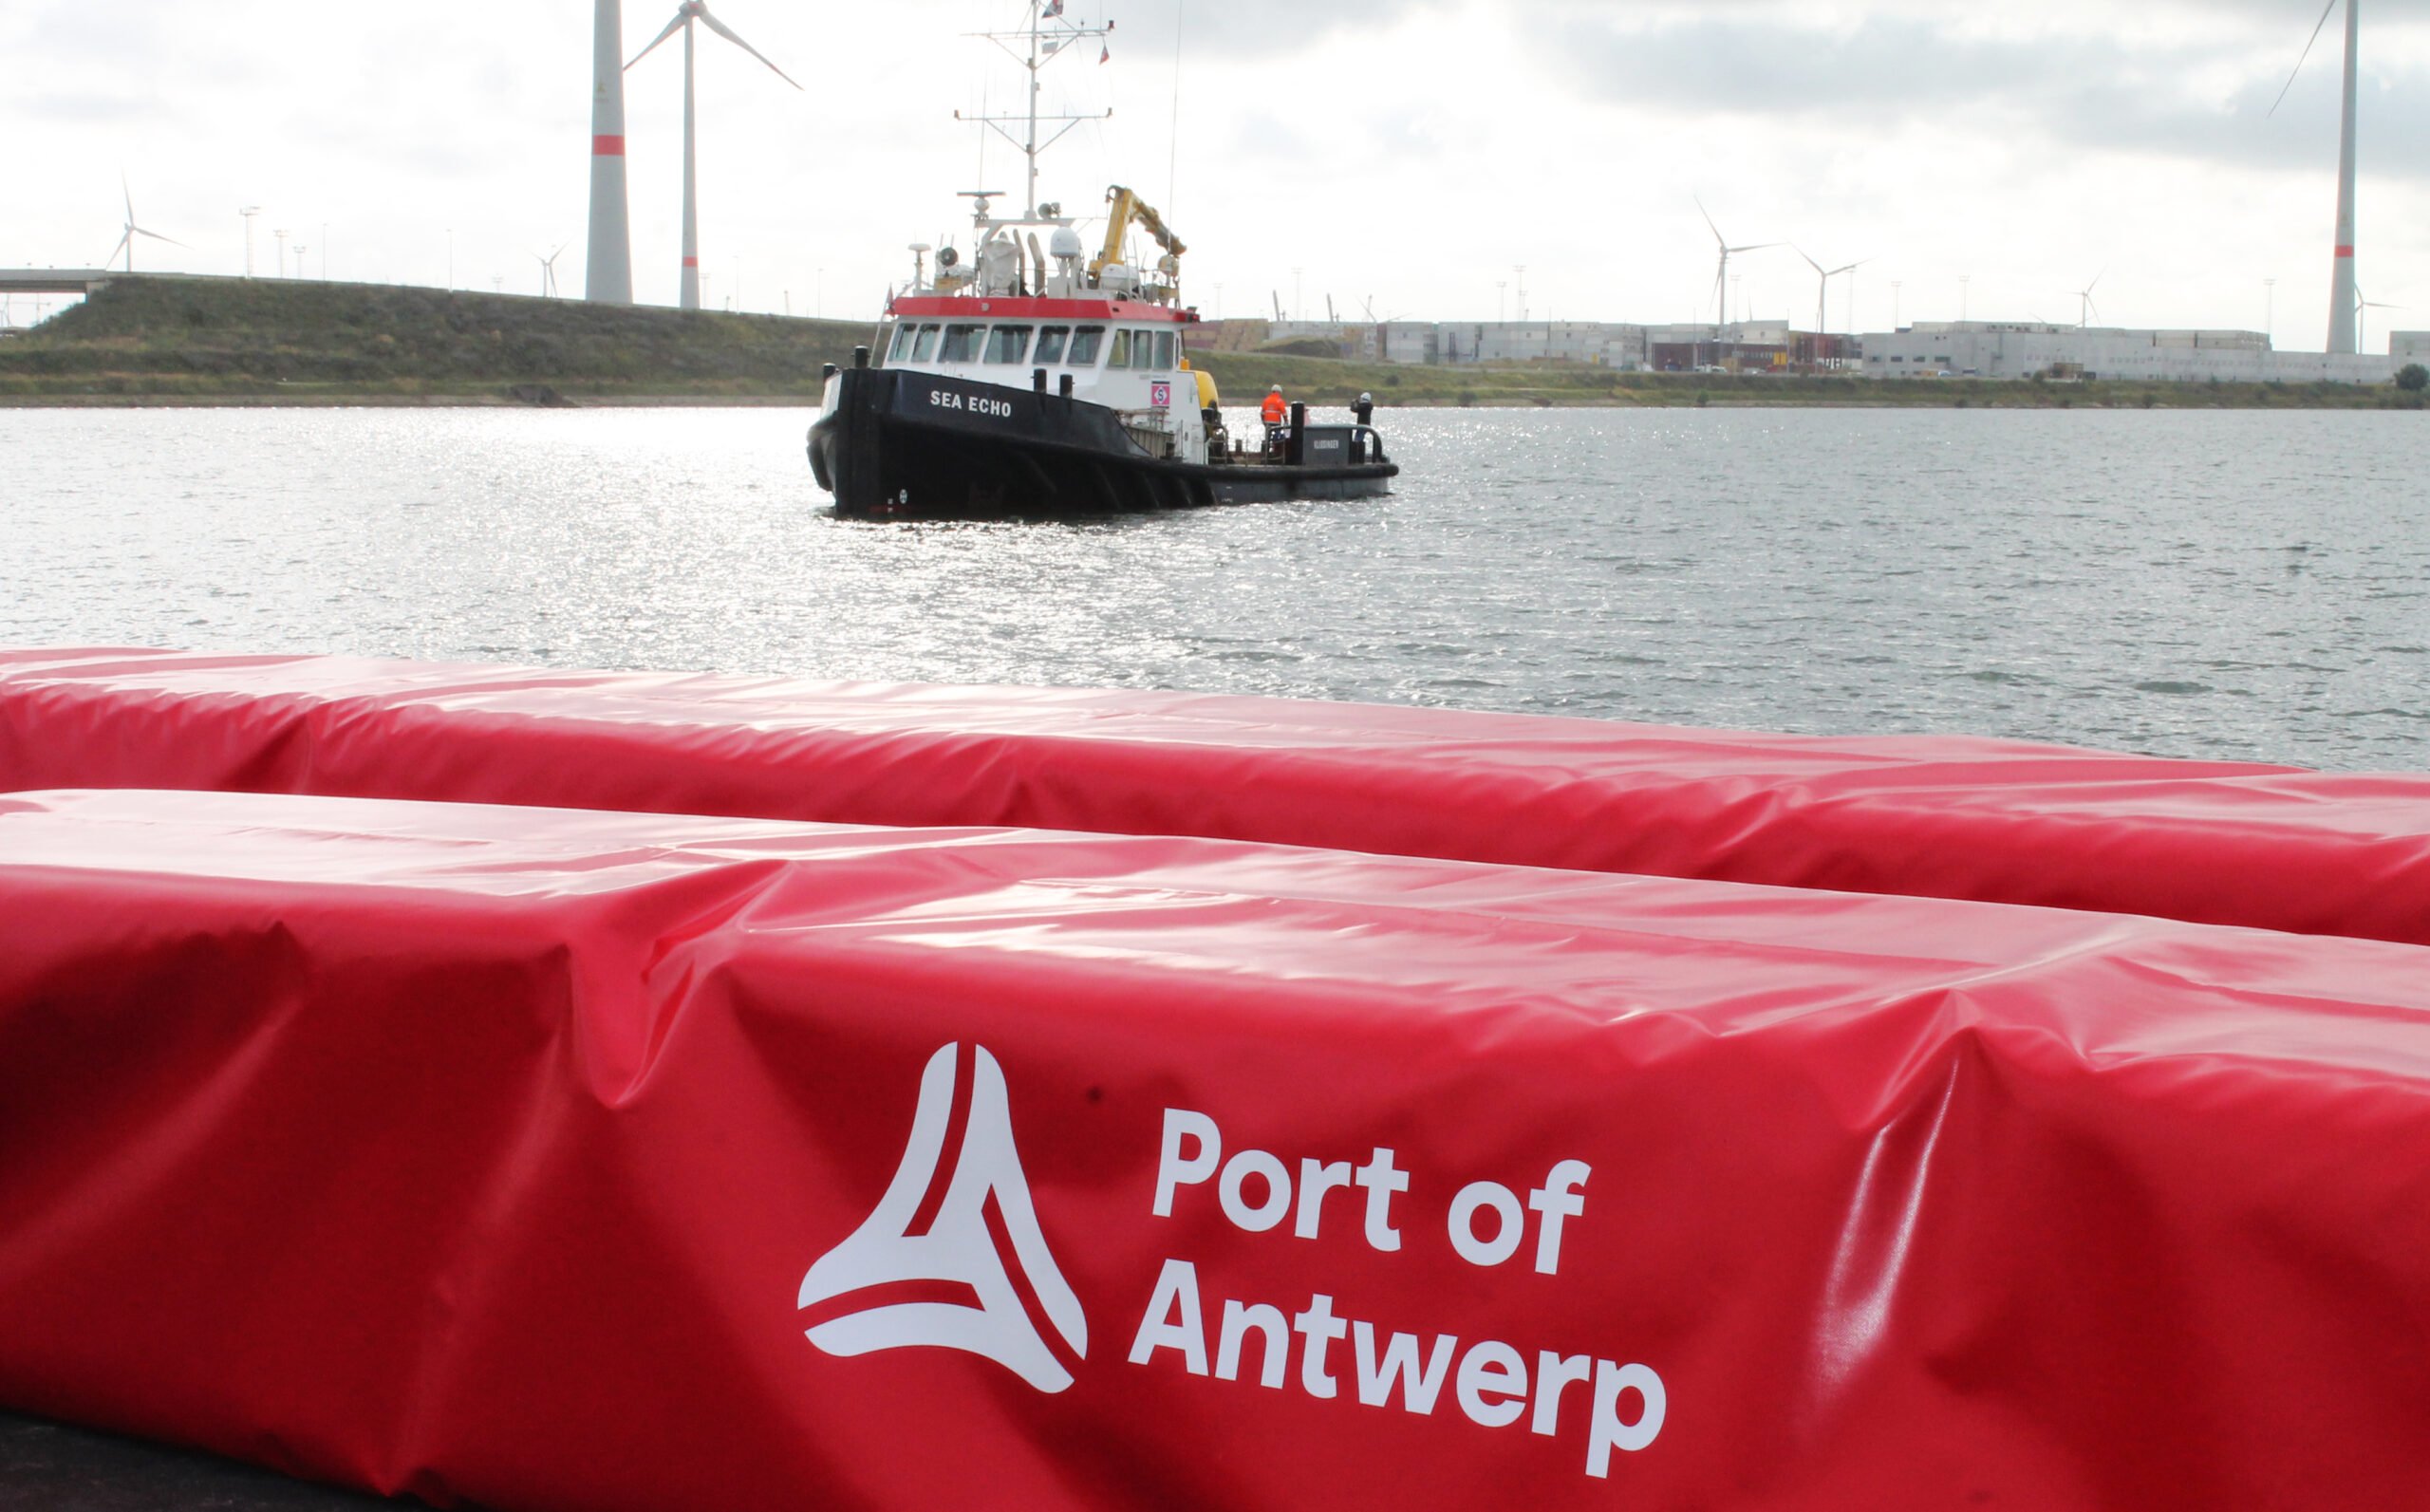 Port of Antwerp-Bruges